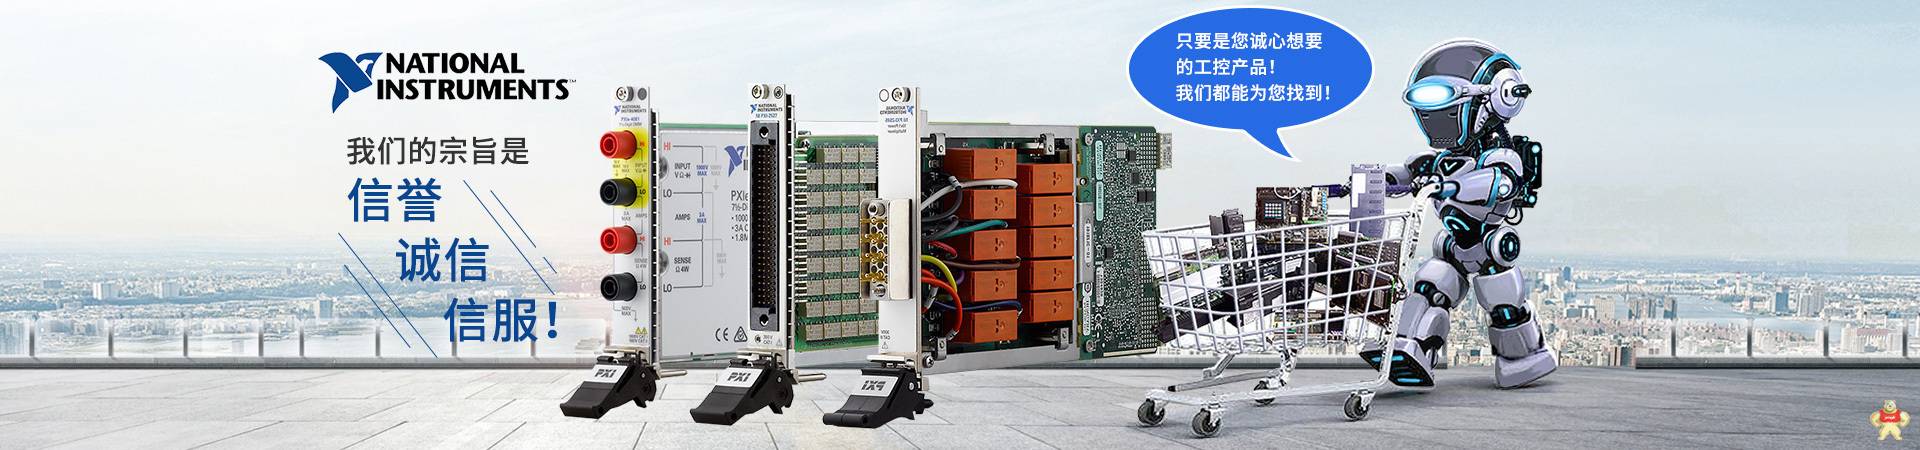 NI PCI-6221数据采集卡 数字模式仪器 板卡 控制器 电源模块 库存有货 